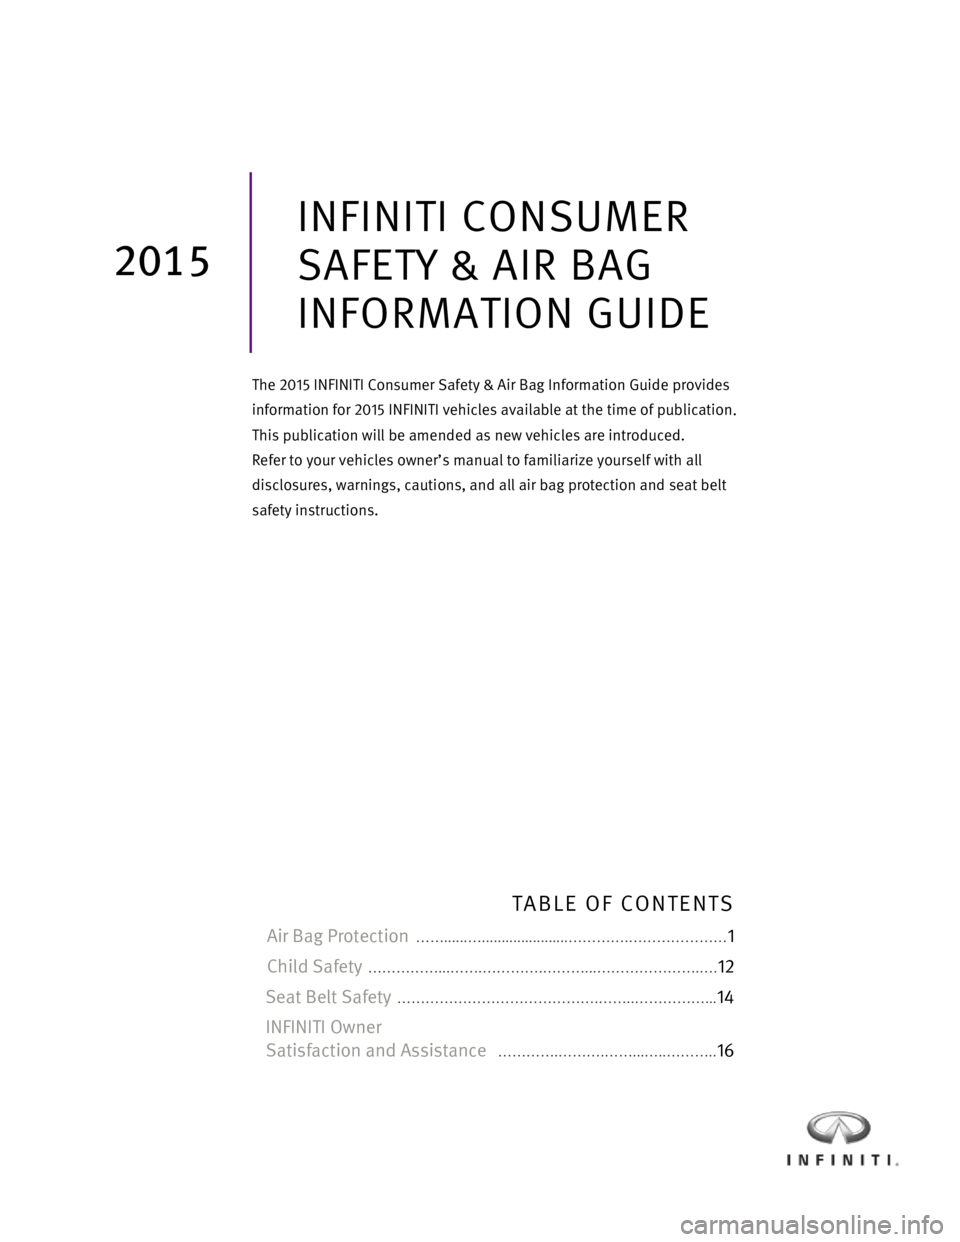 INFINITI Q50 HYBRID 2015  Consumer Safety And Air Bag Information Guide 2015 INFINITI  Consumer Safety &  Air Bag Information Guide                                            0 
 
 
 
 
 
 
 
 
 
 
 
 
 
 
 
 
 
 
 
 
 
 
 
 
 
 
 
 
 
 
 
 
INFINITI CONSUMER  
SAFETY & A